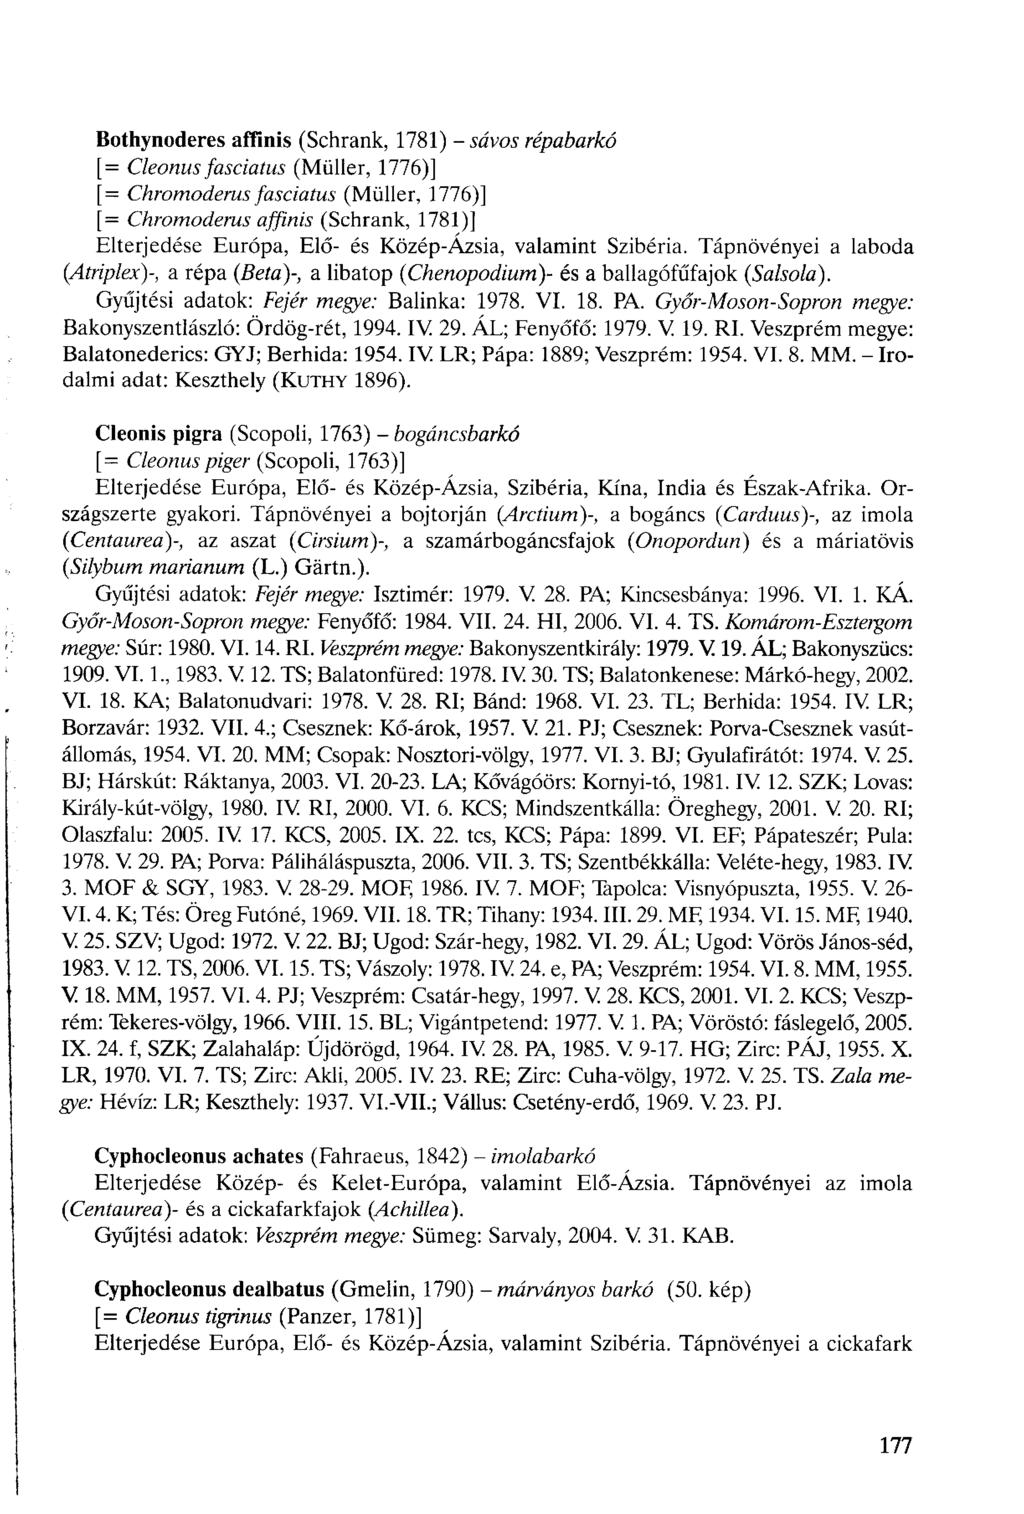 Bothynoderes a tit ni s (Schrank, 1781) - sávos répabarkó [= Cleonus fasciatus (Müller, 1776)] [= Chromoderus fasciatus (Müller, 1776)] [= Chromoderus affinis (Schrank, 1781)] Elterjedése Európa,